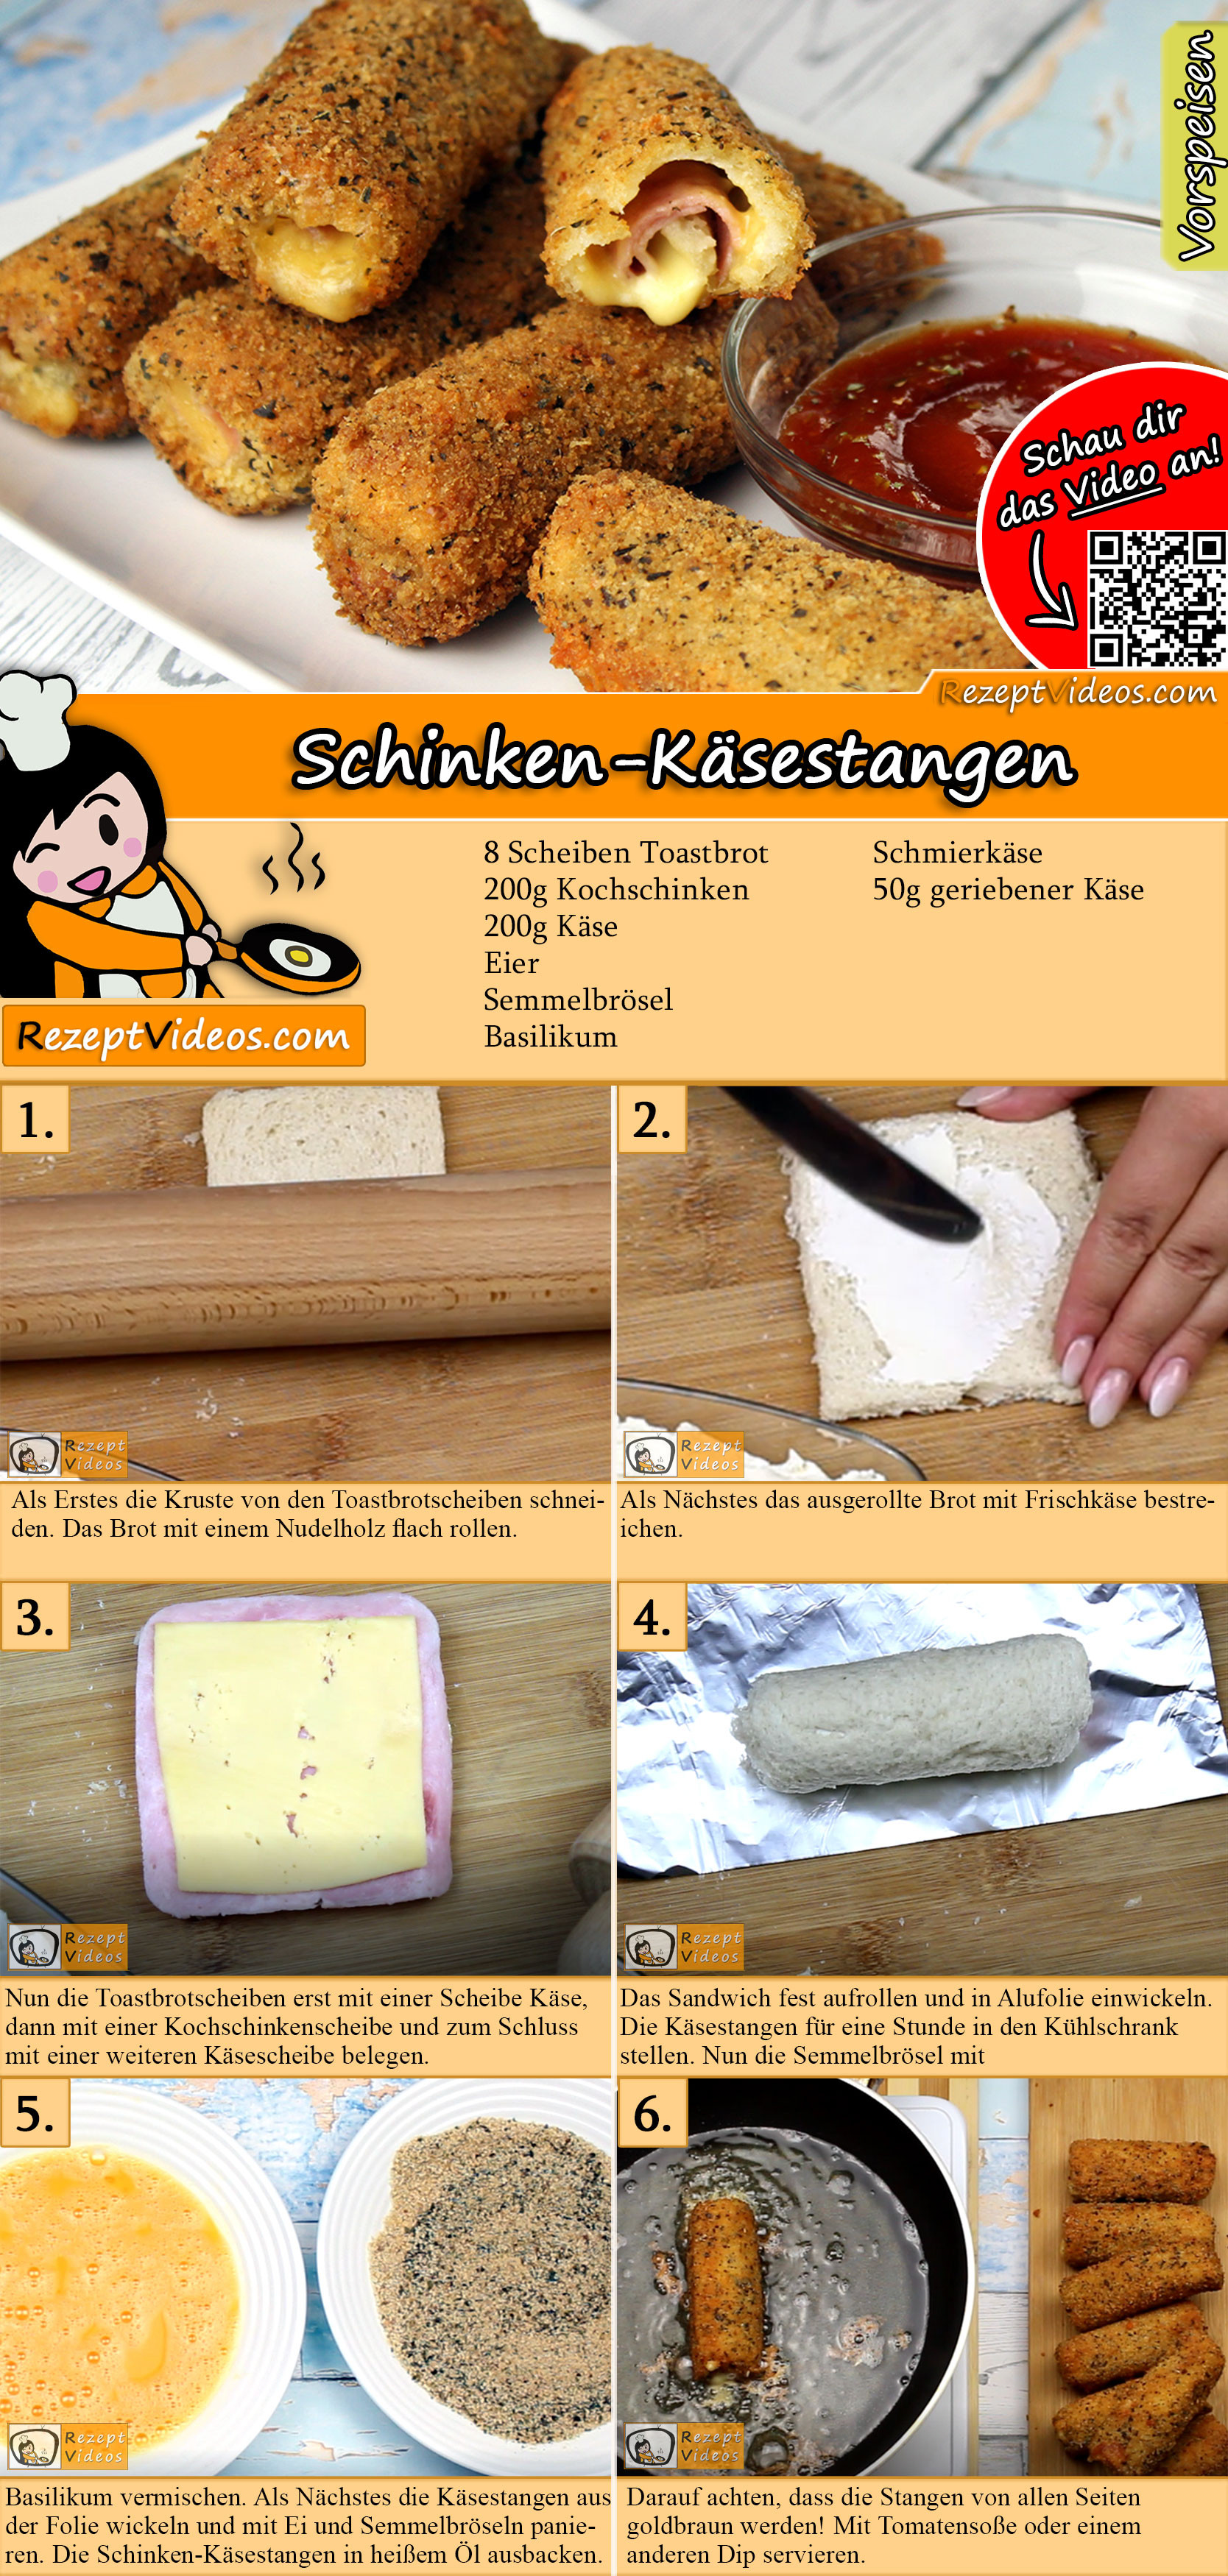 Schinken-Käsestangen Rezept mit Video